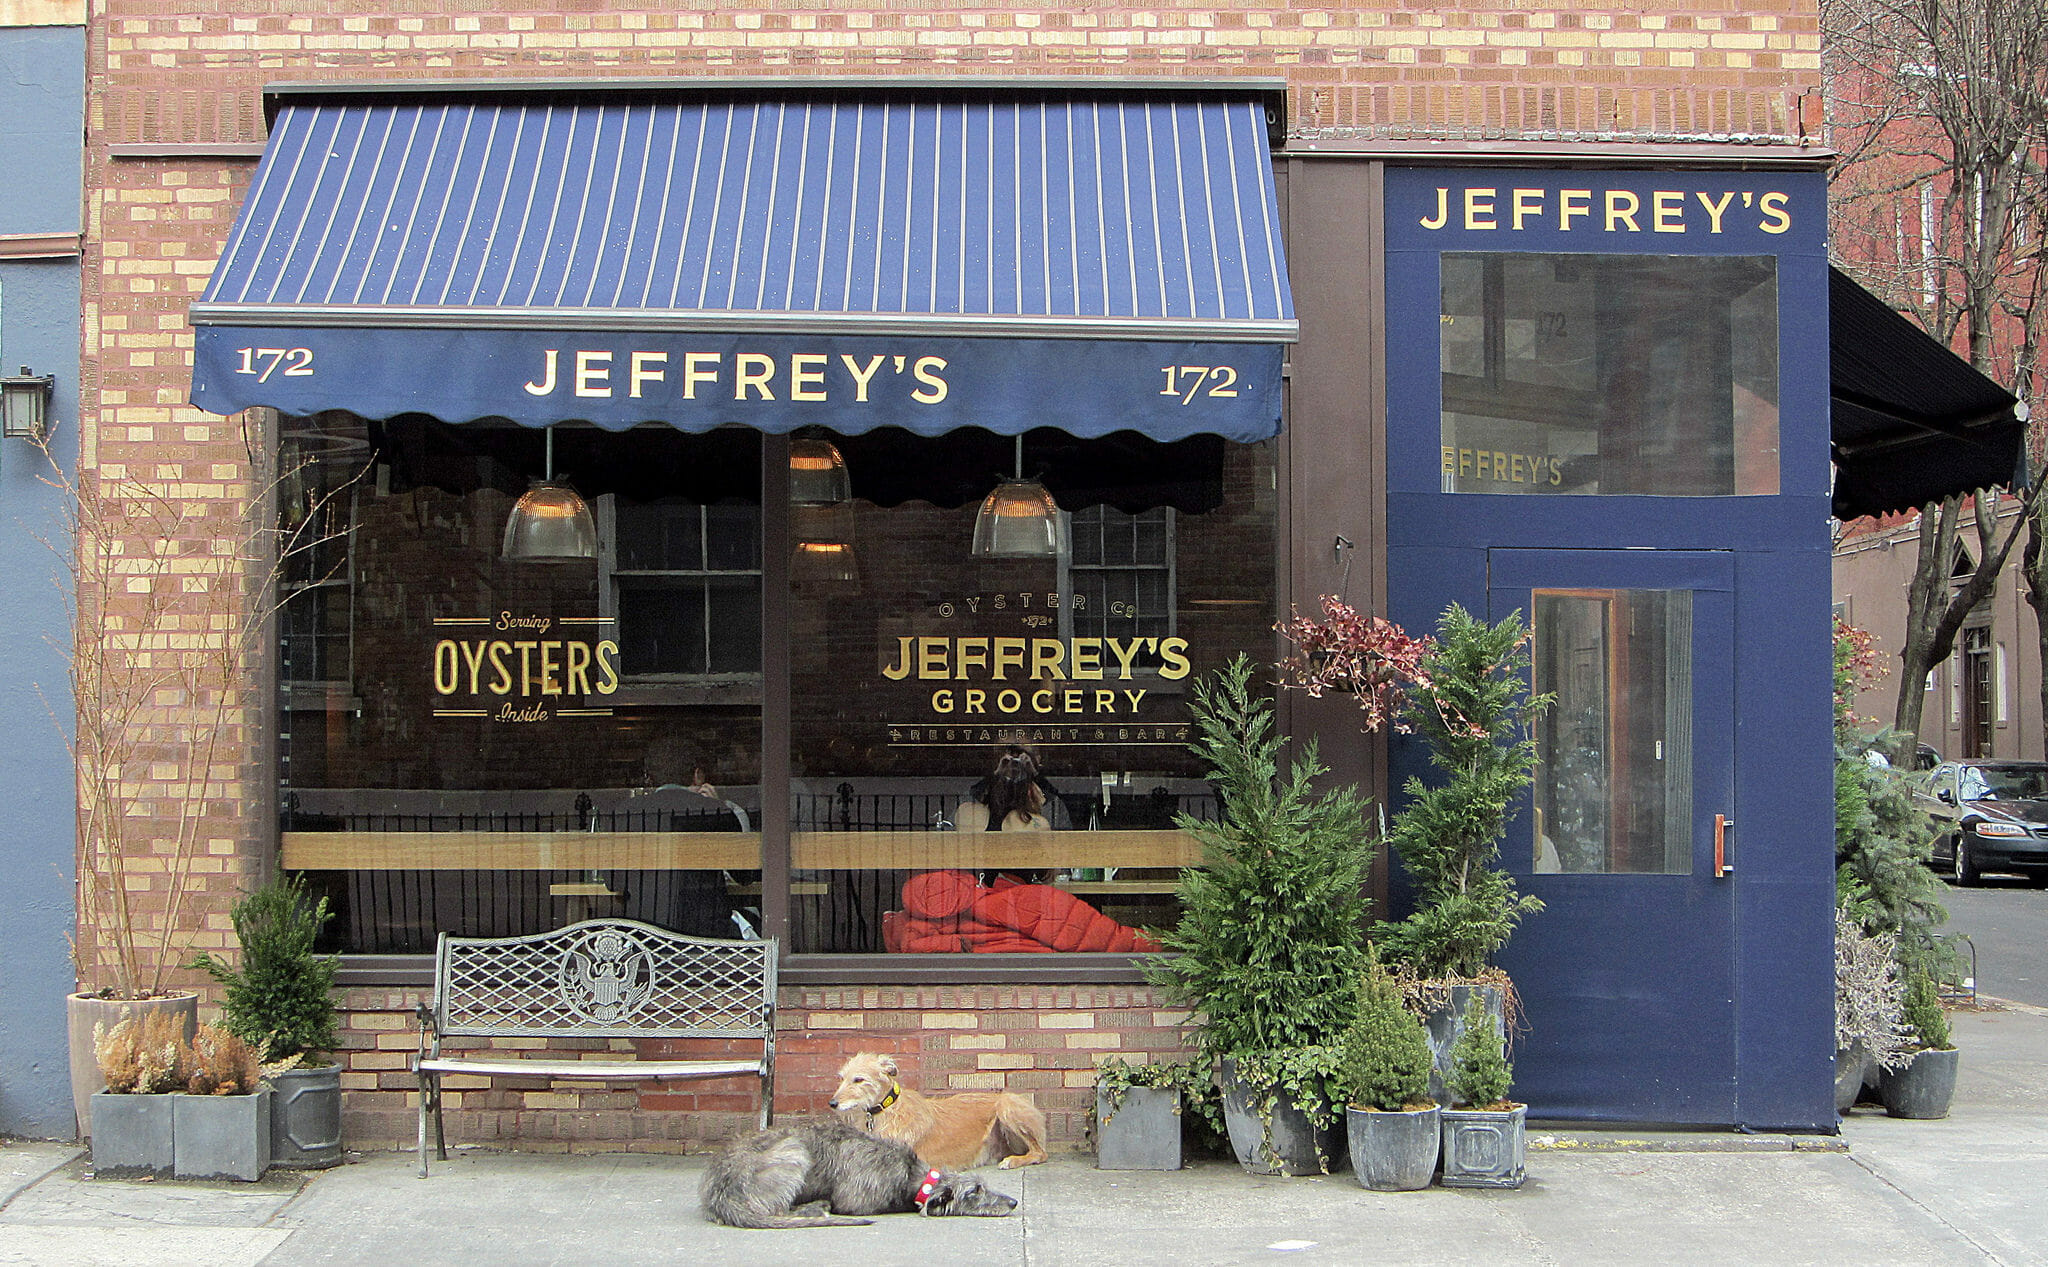 jeffery's grocery: NYC Happy Hours with (Good) Food: